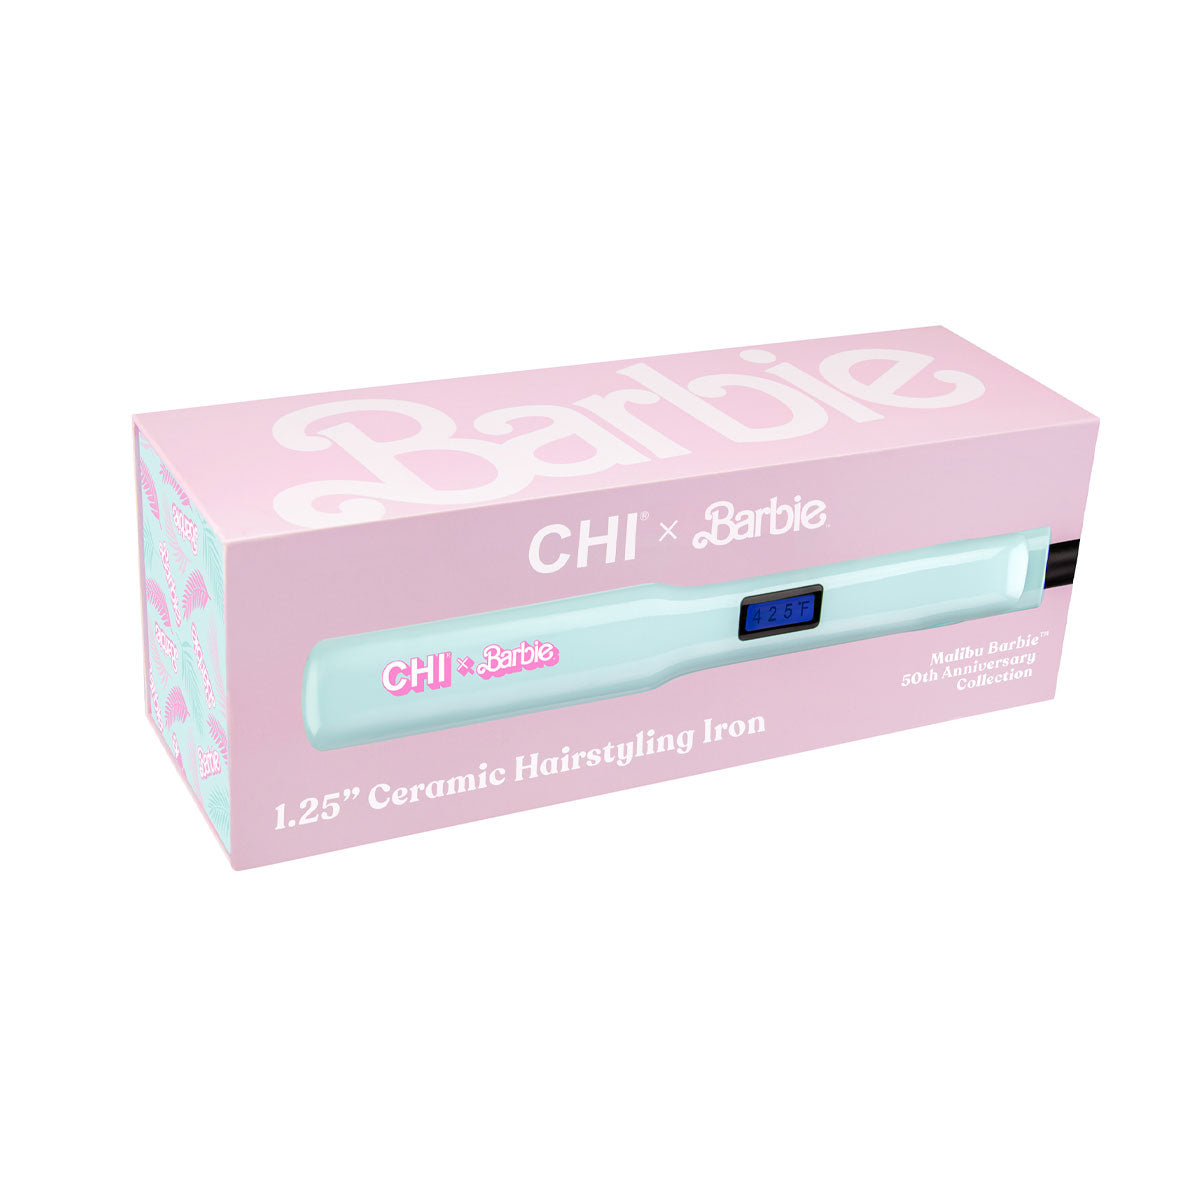 CHI x Barbie 1.25″ Ceramic Hairstyling Iron